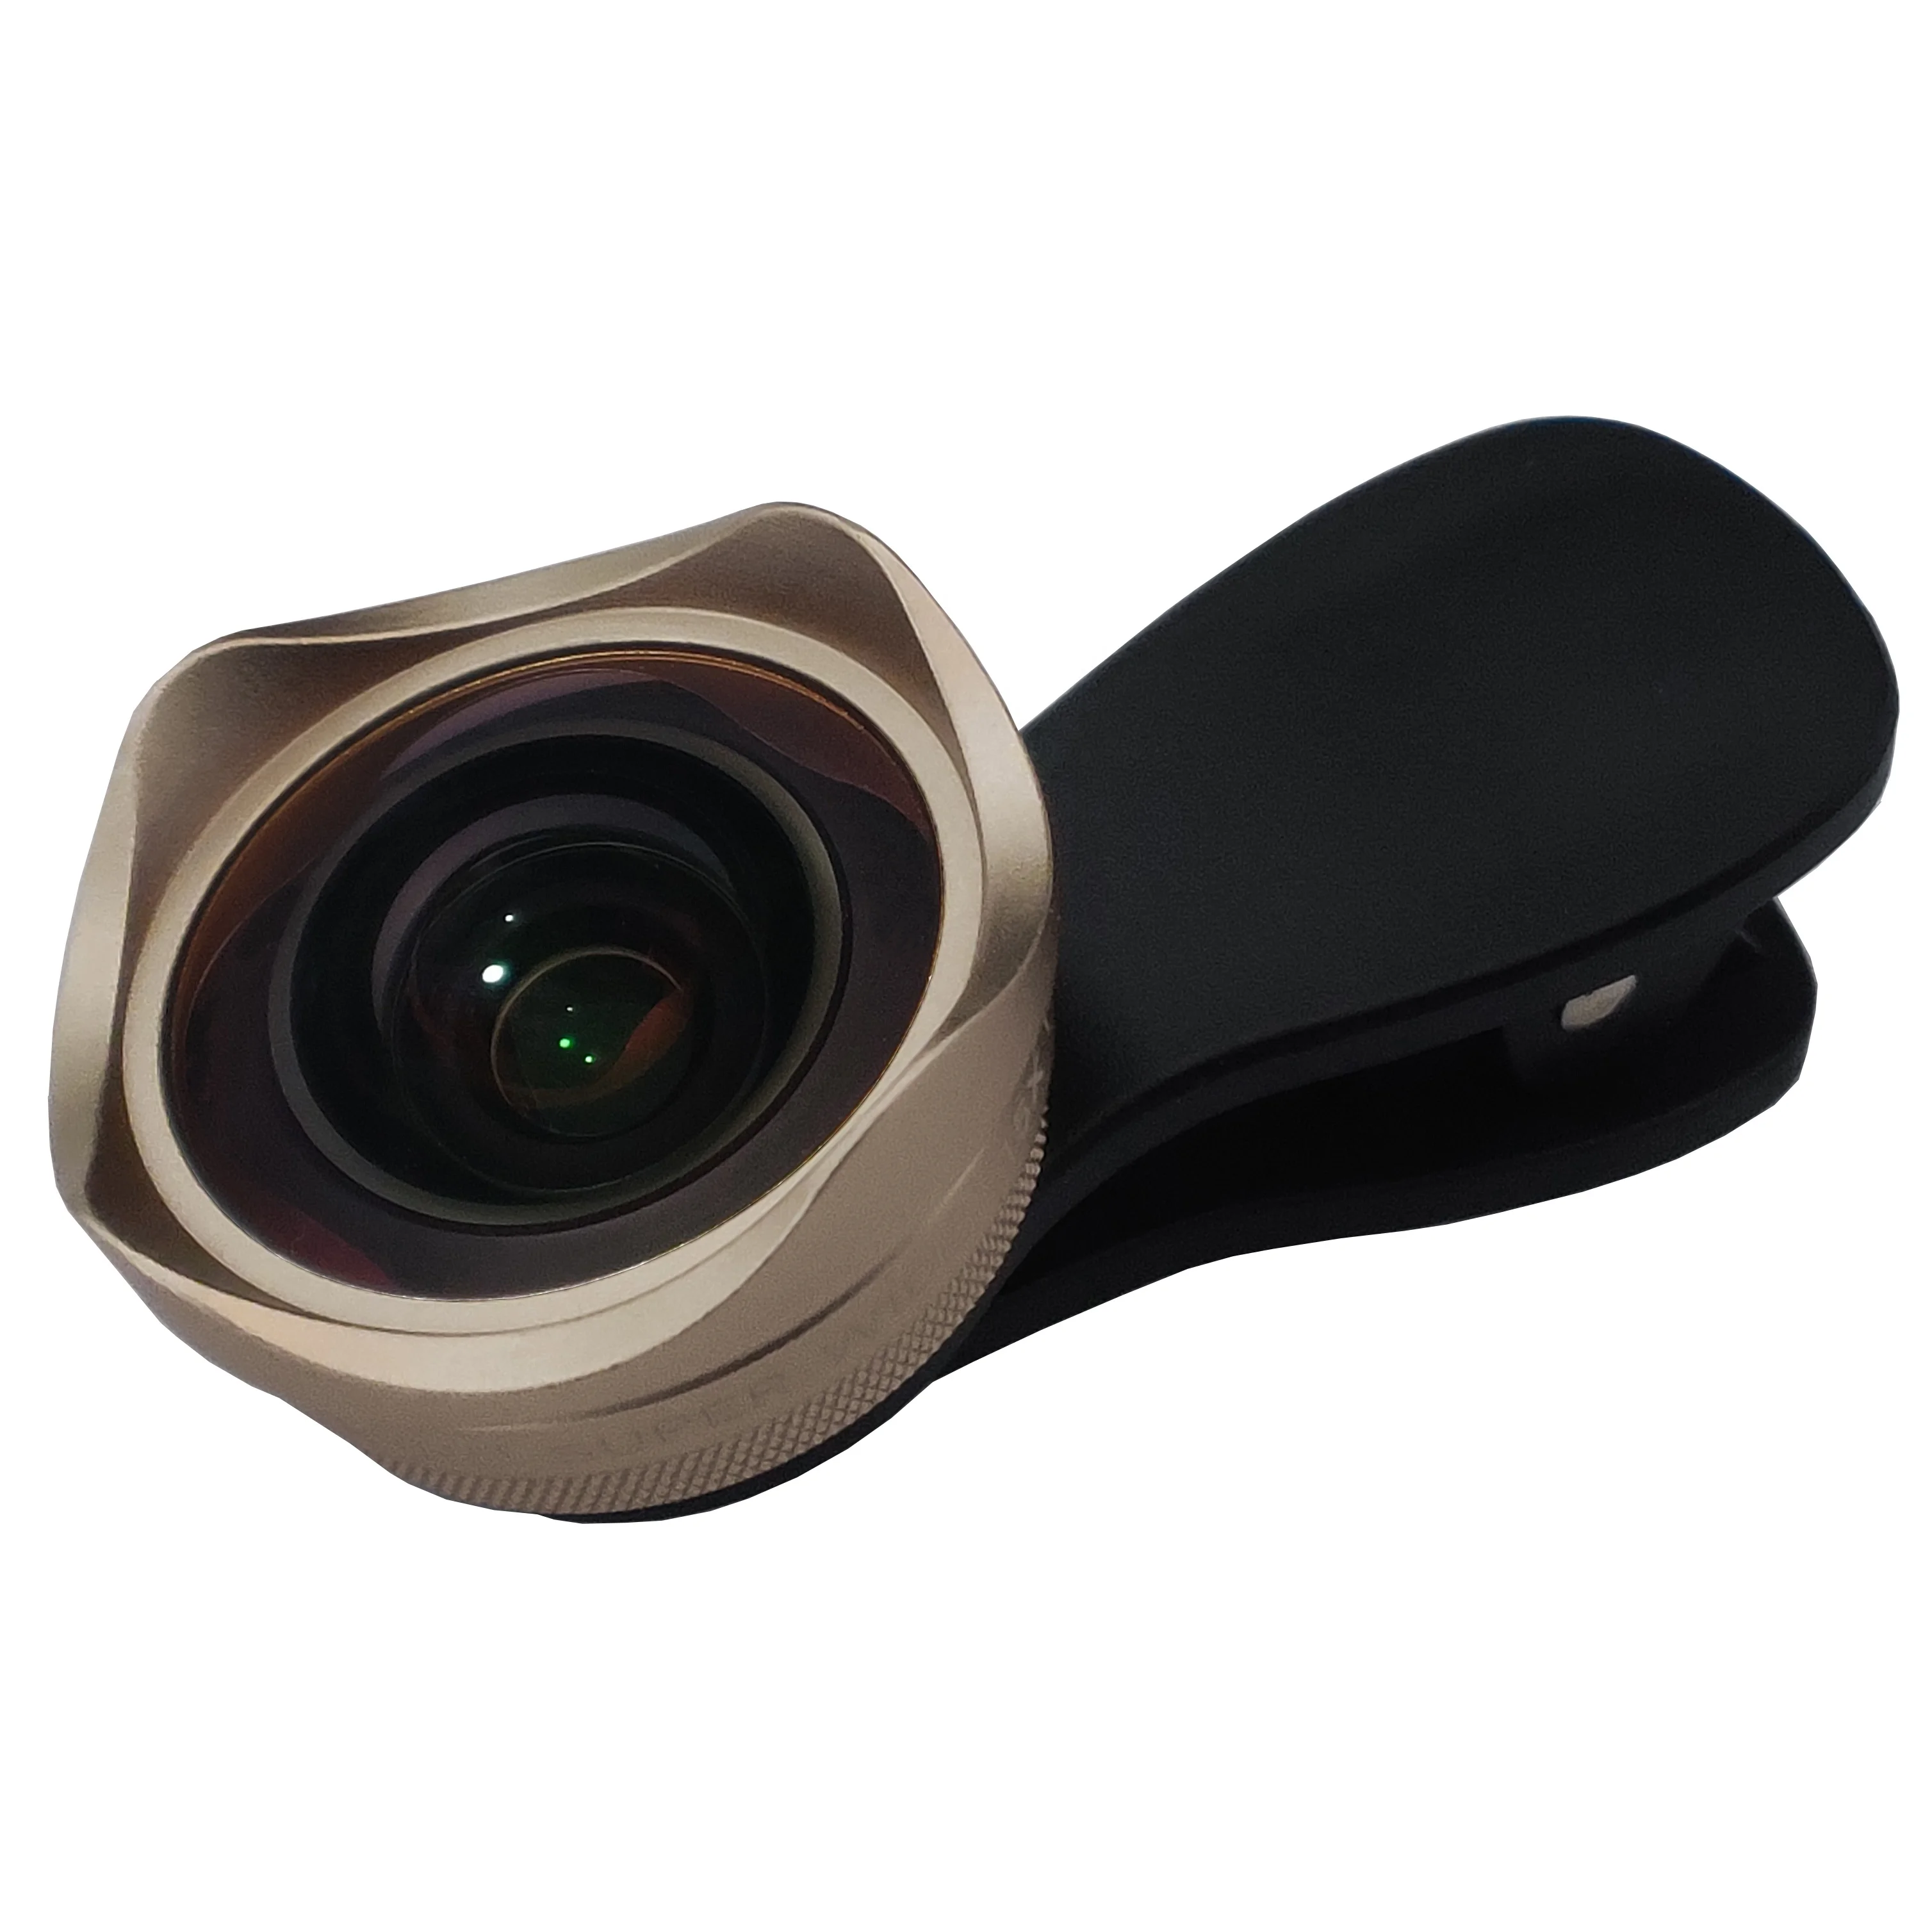 

Amazon Best Seller Mobile Phone Camera Lens 160 Degree 0.6x Wide Angle Macro 2 In 1 Lens For Iphone For Smartphones Selfie Lens, Black